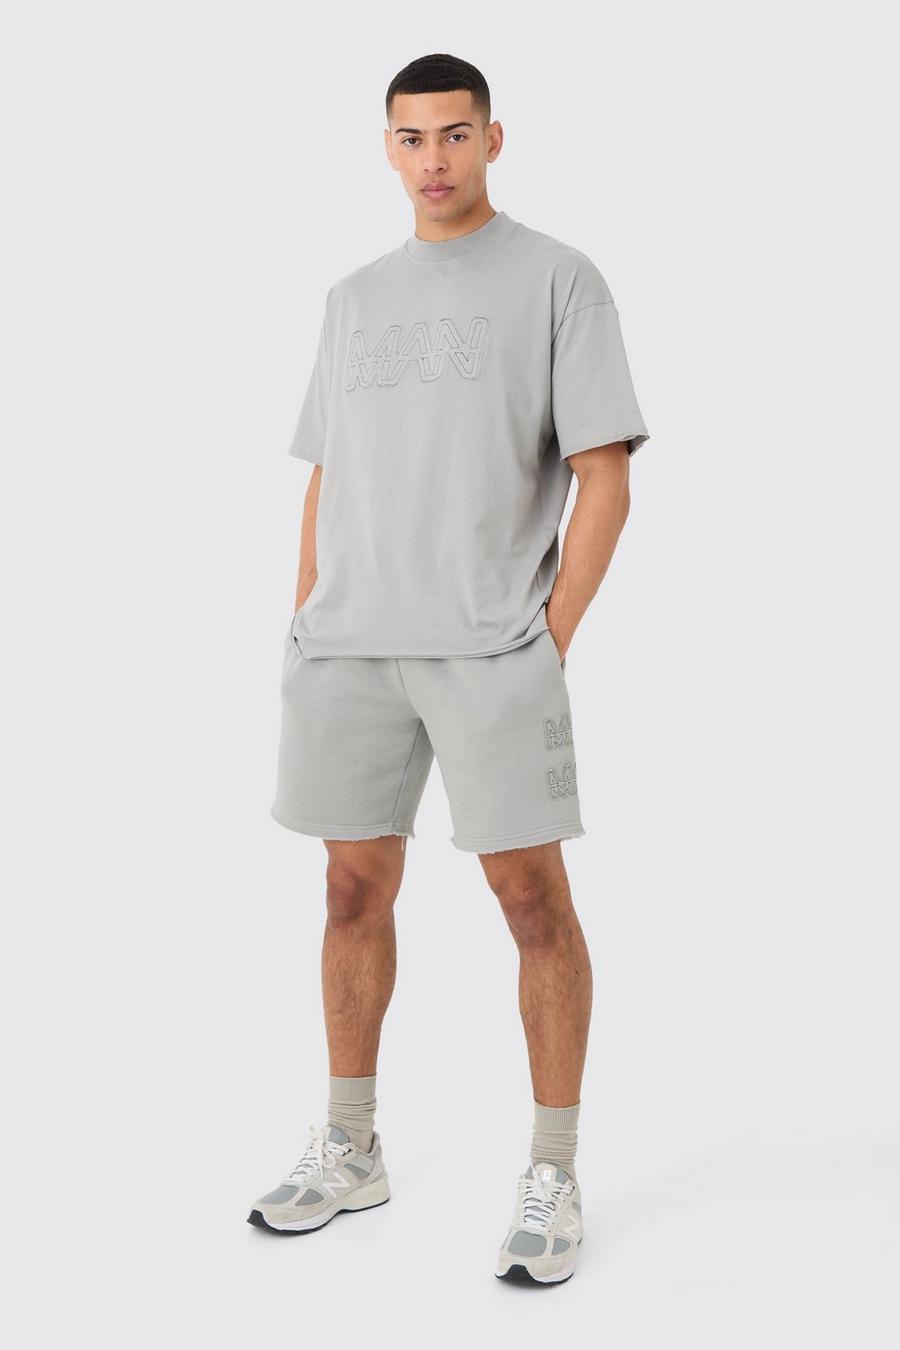 Kastiges zerrissenes Man T-Shirt & Shorts, Grey